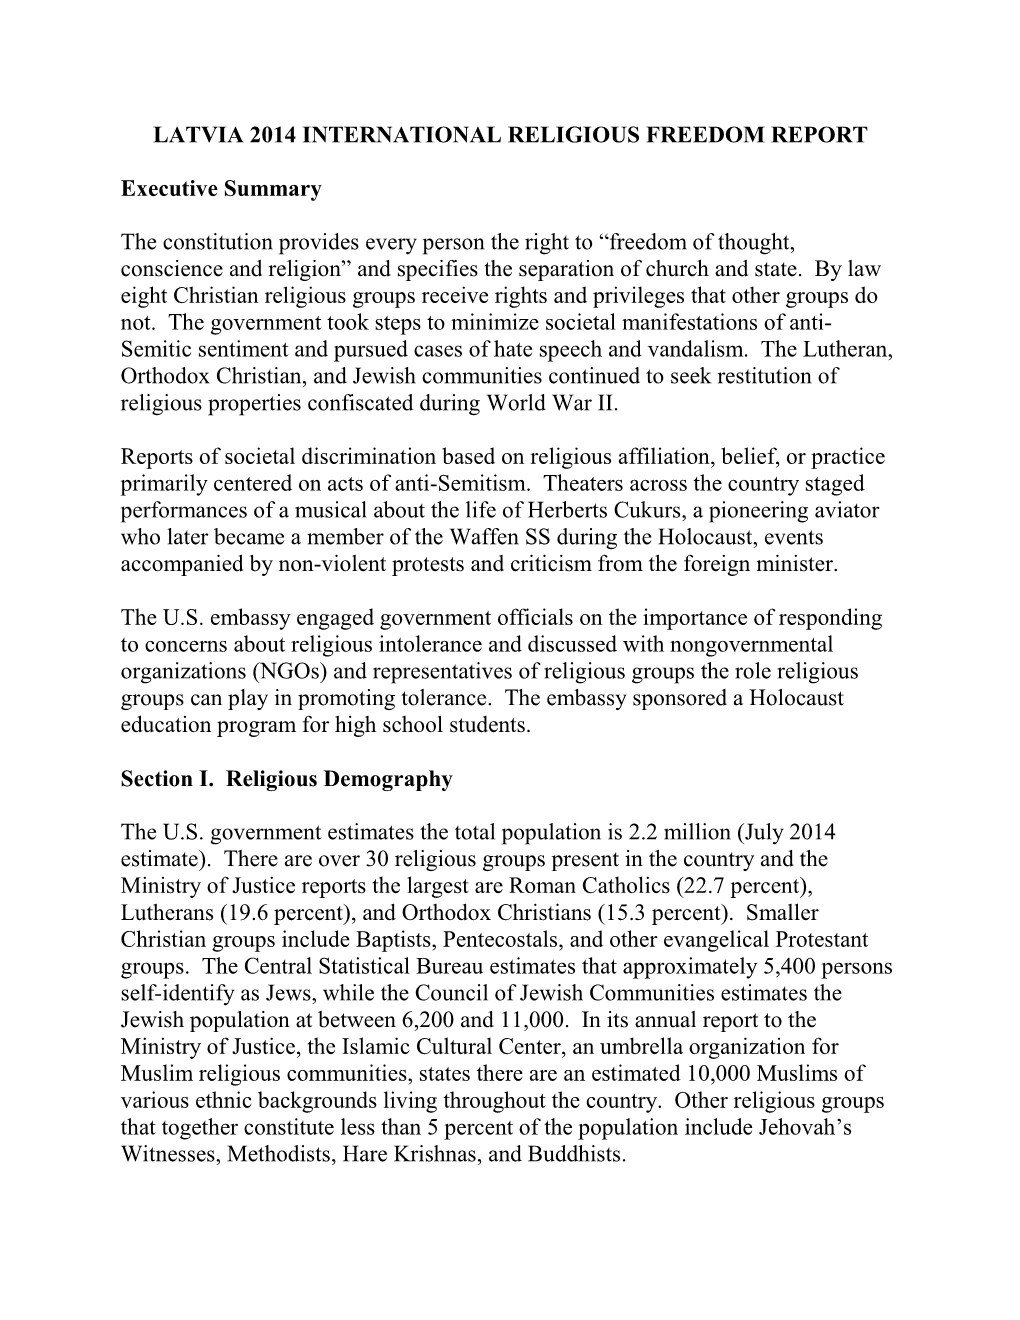 Latvia 2014 International Religious Freedom Report